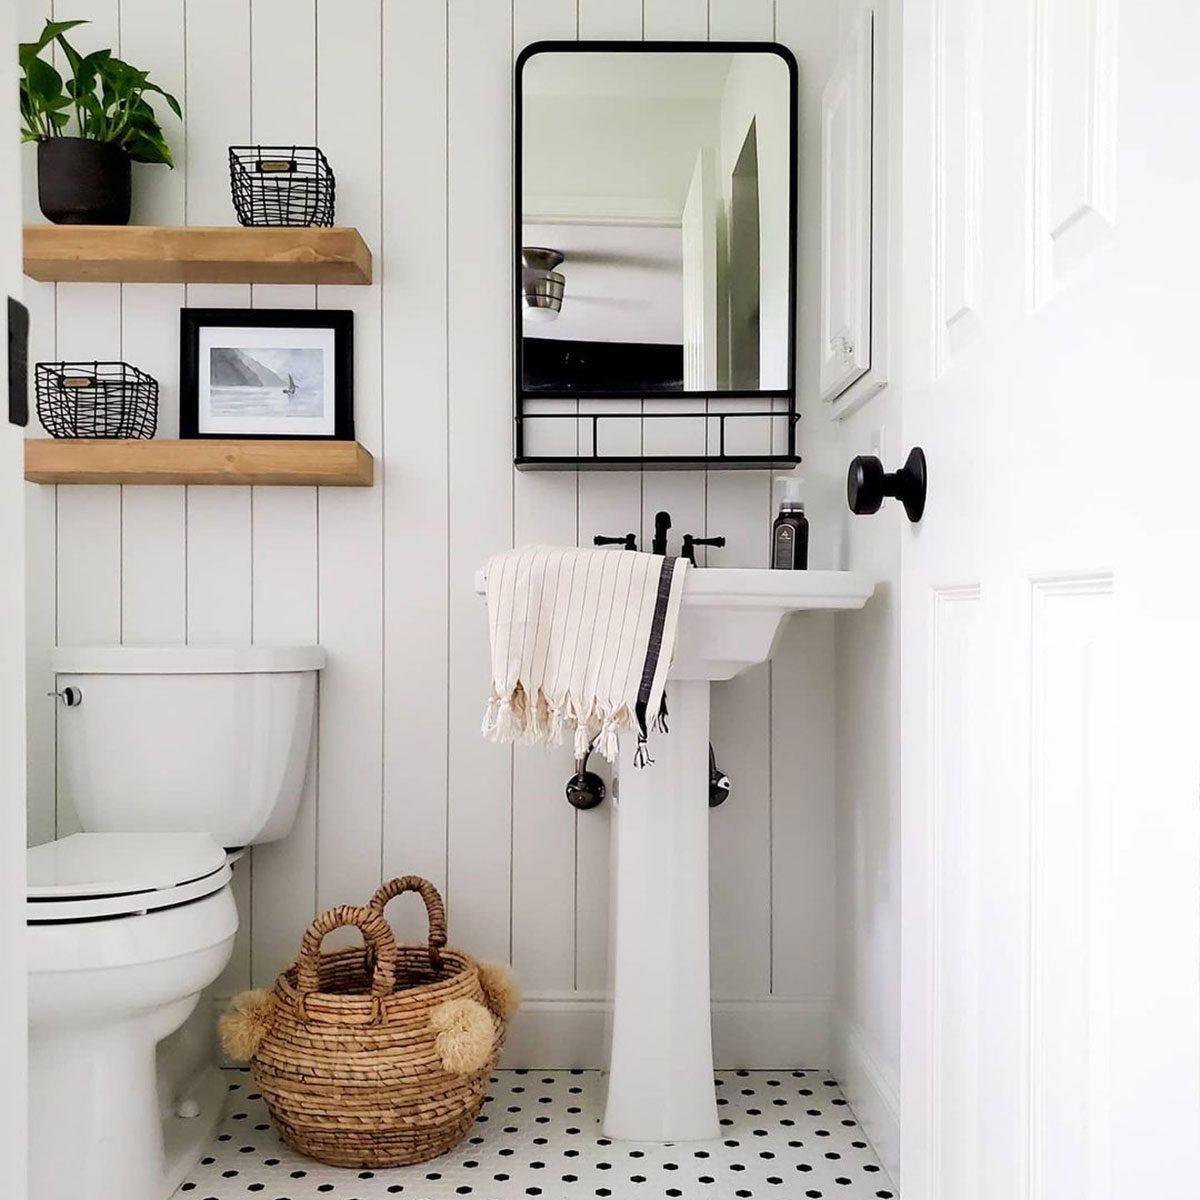 10 Small Bathroom Decorating Ideas | Family Handyman